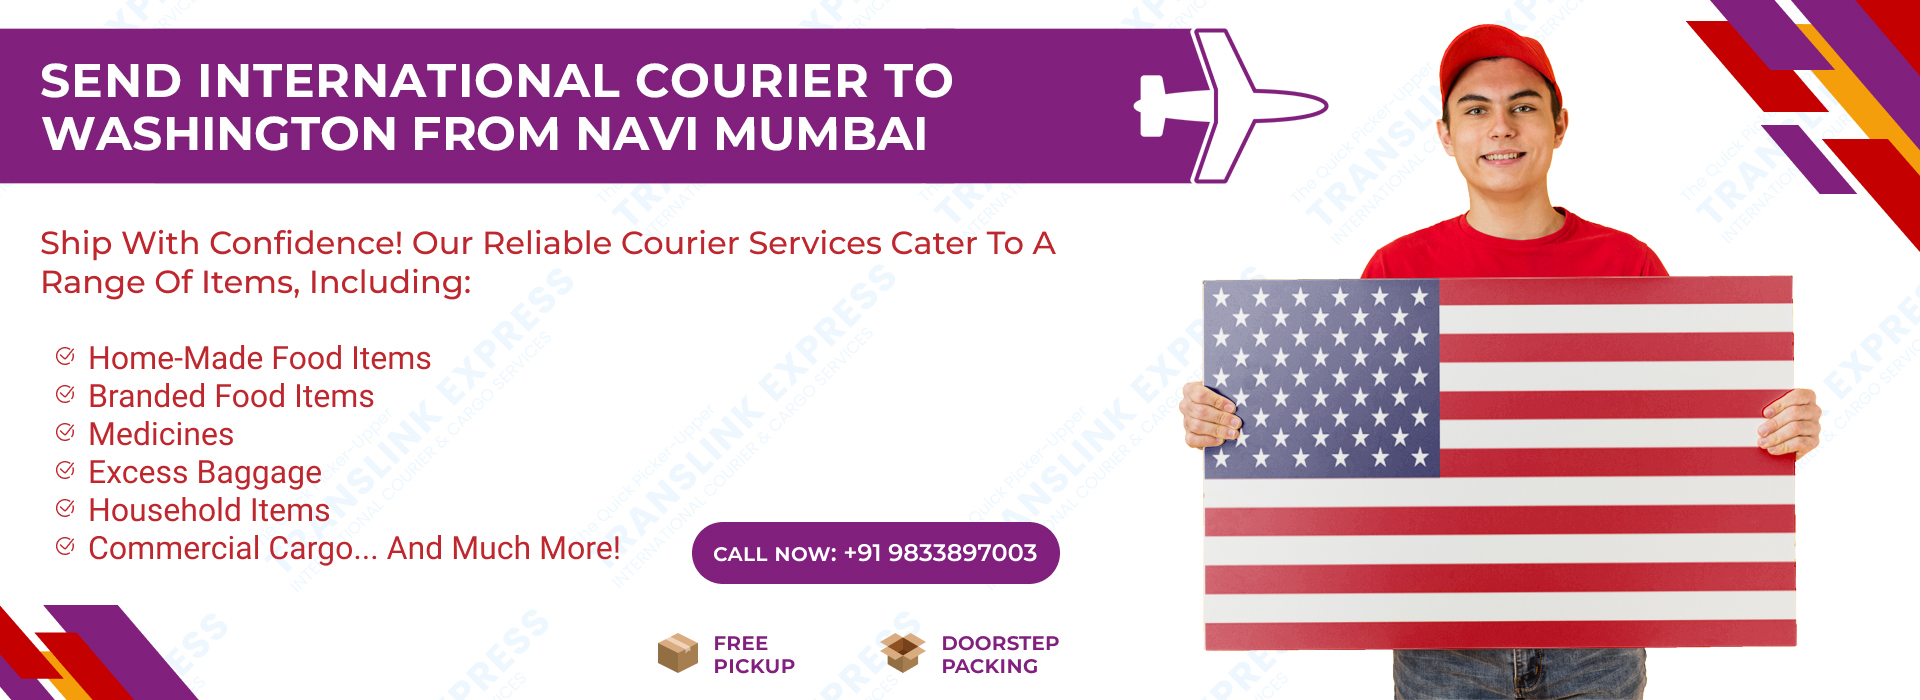 Courier to Washington From Navi Mumbai